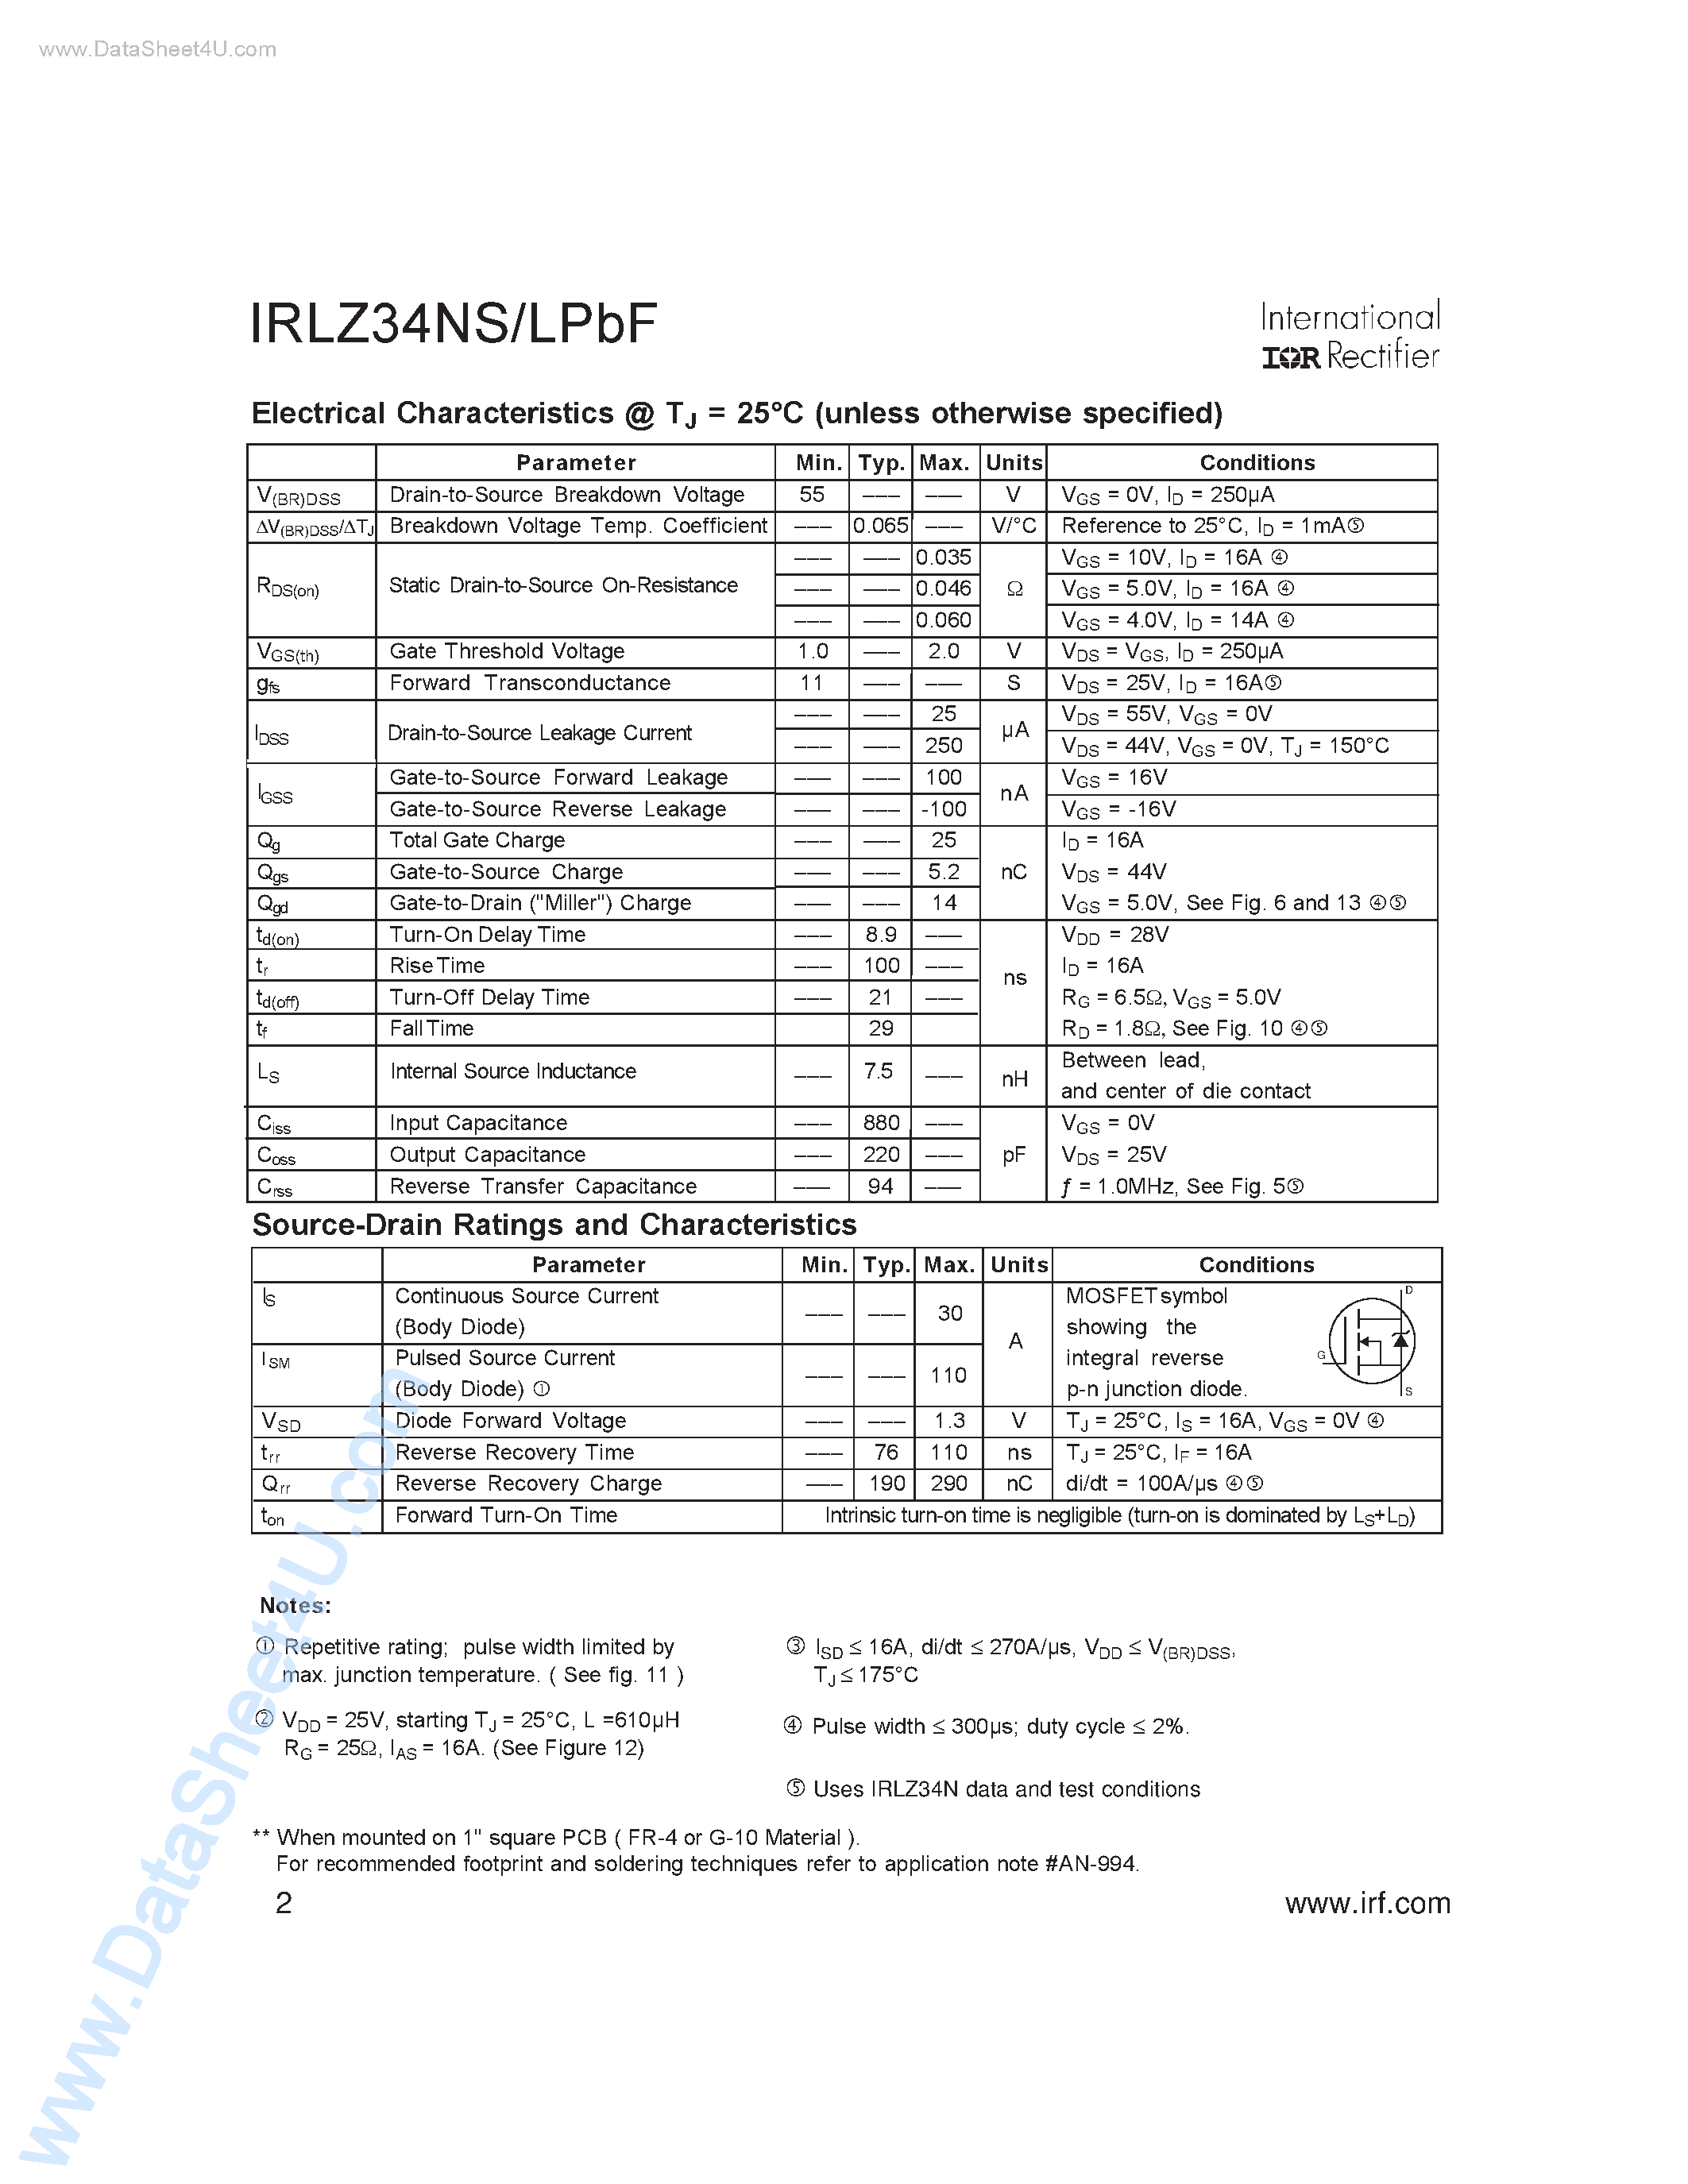 Datasheet IRLZ34NLPBF - (IRLZ34NSPBF / IRLZ34NLPBF) Power MOSFET page 2